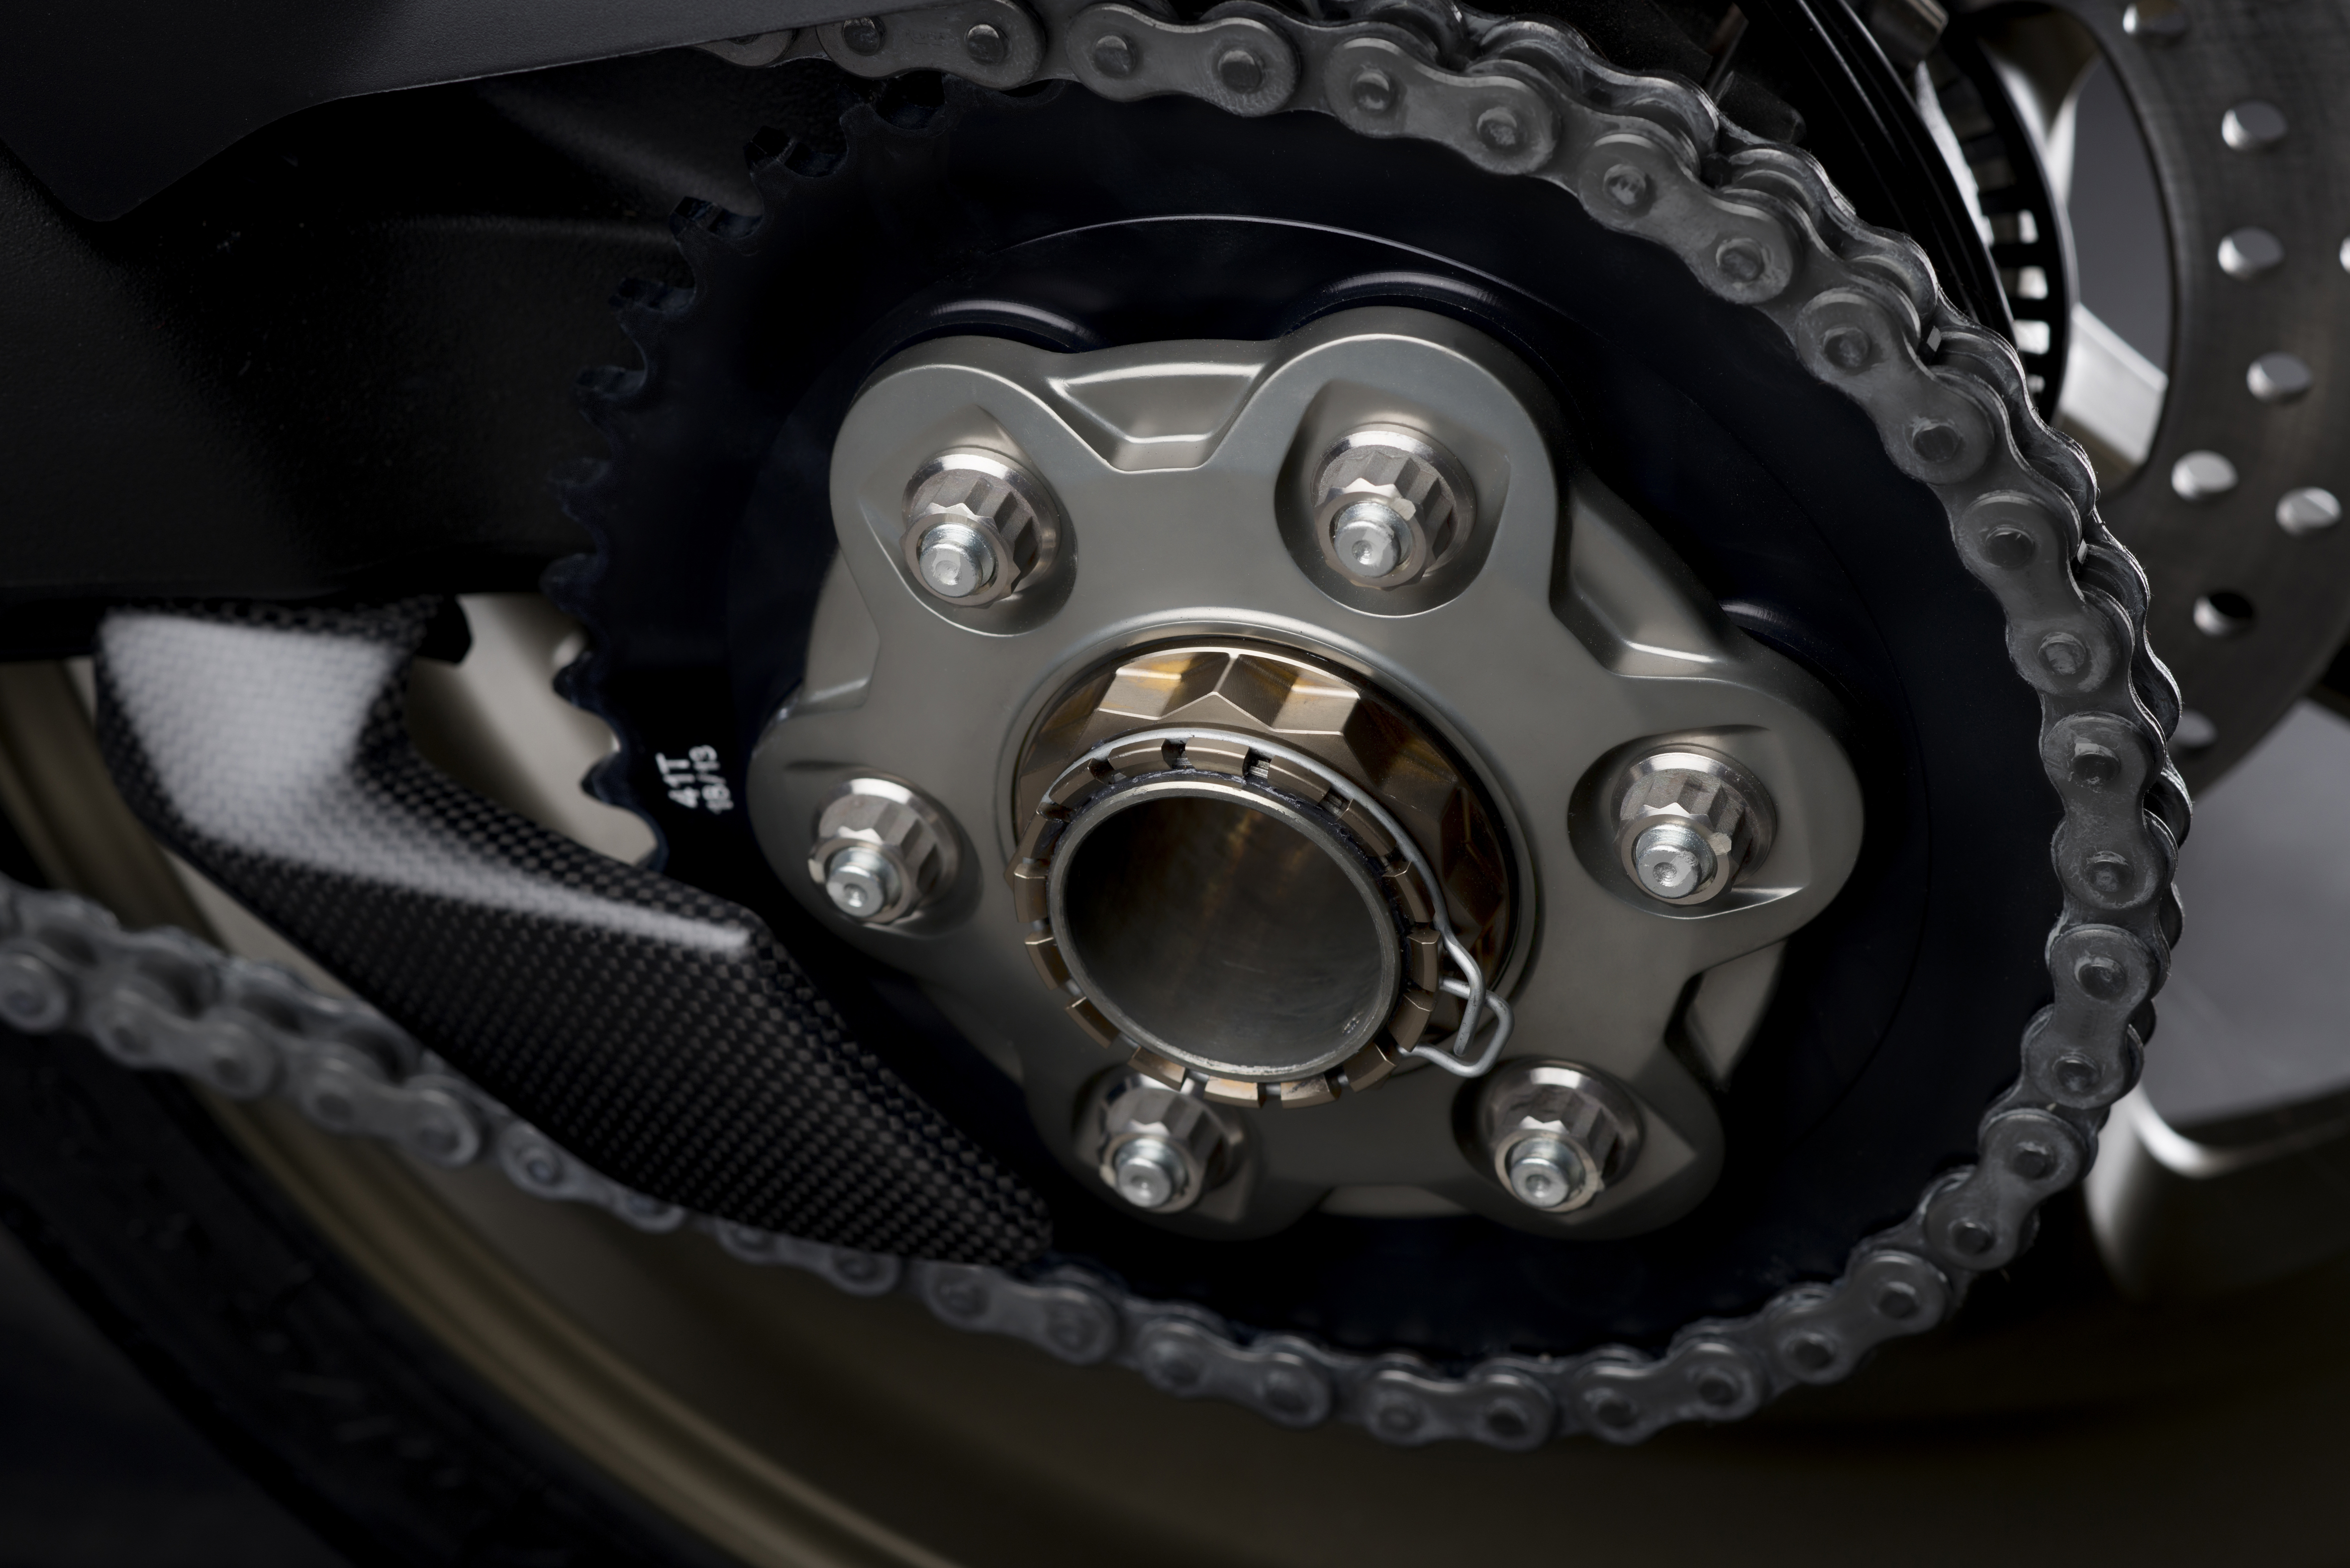 Ducati 1199 Superleggera: ‘highest power-to-weight ratio in history’